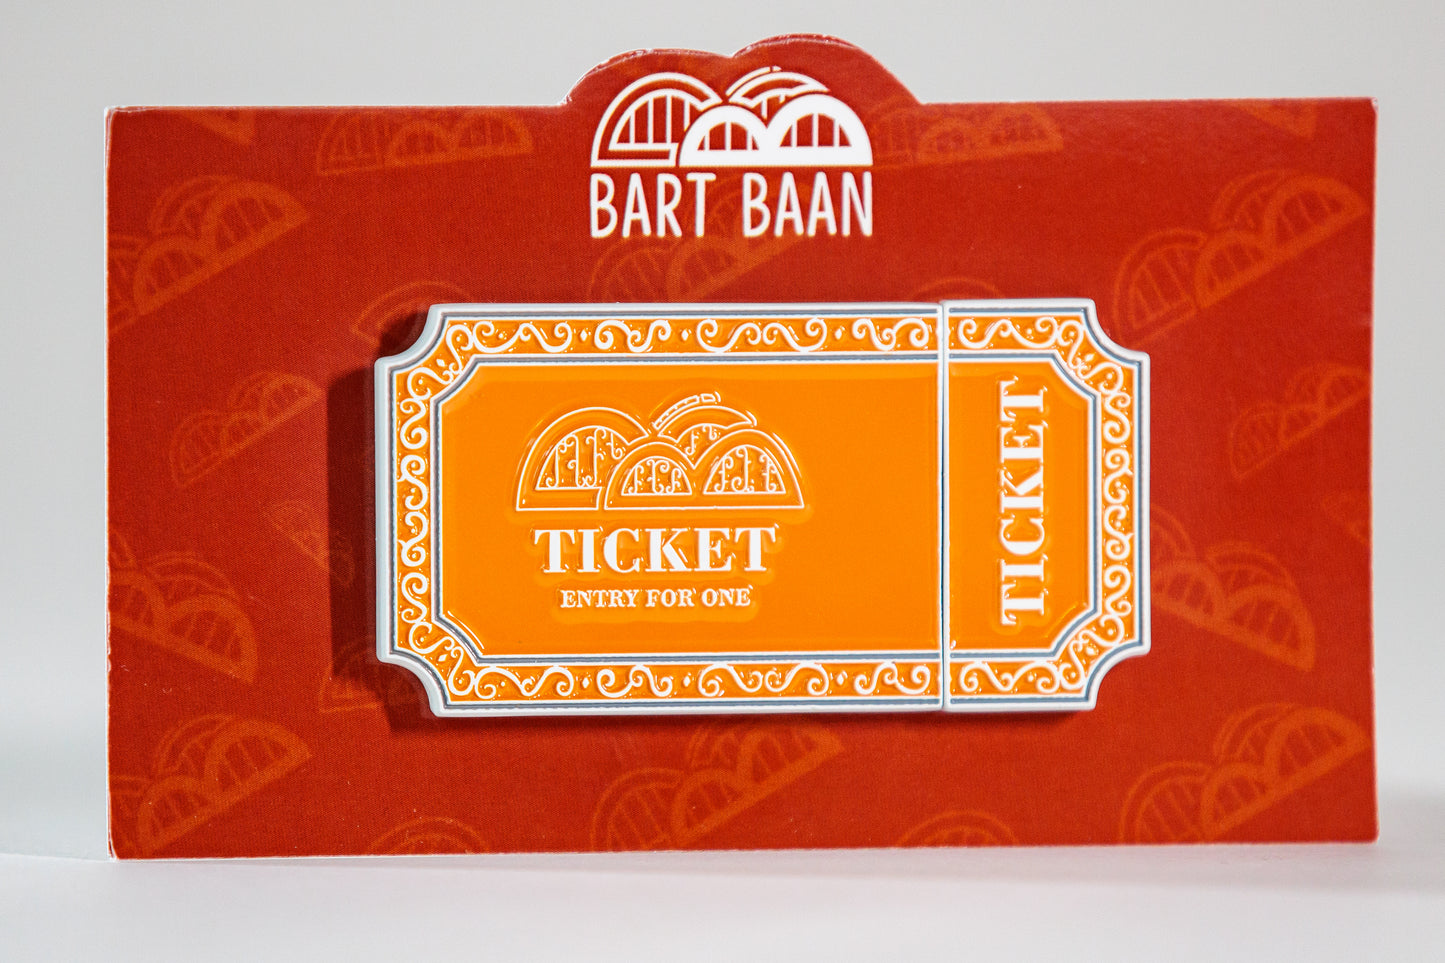 Bart Baan Ticket pin